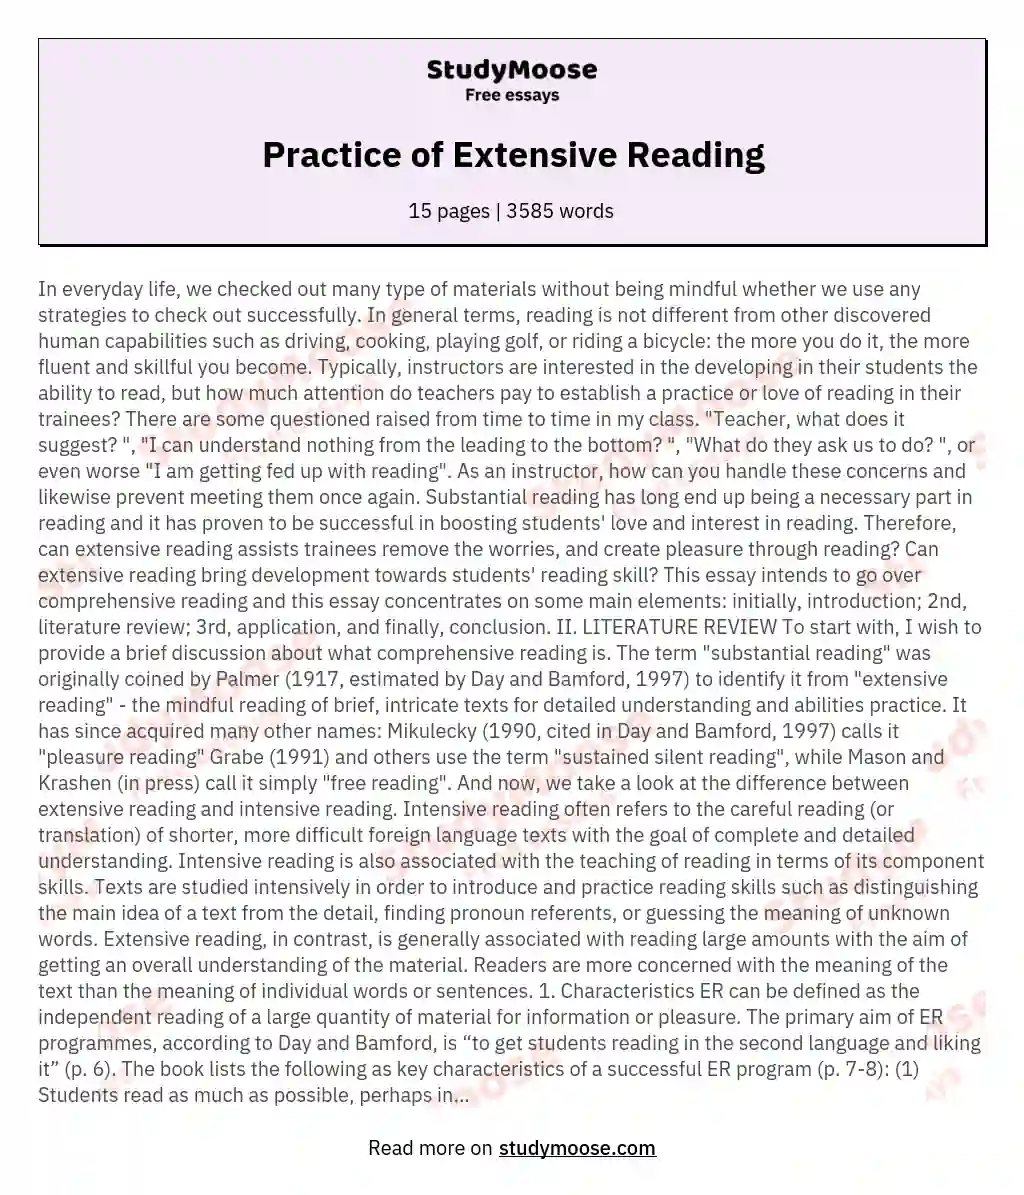 Practice of Extensive Reading essay